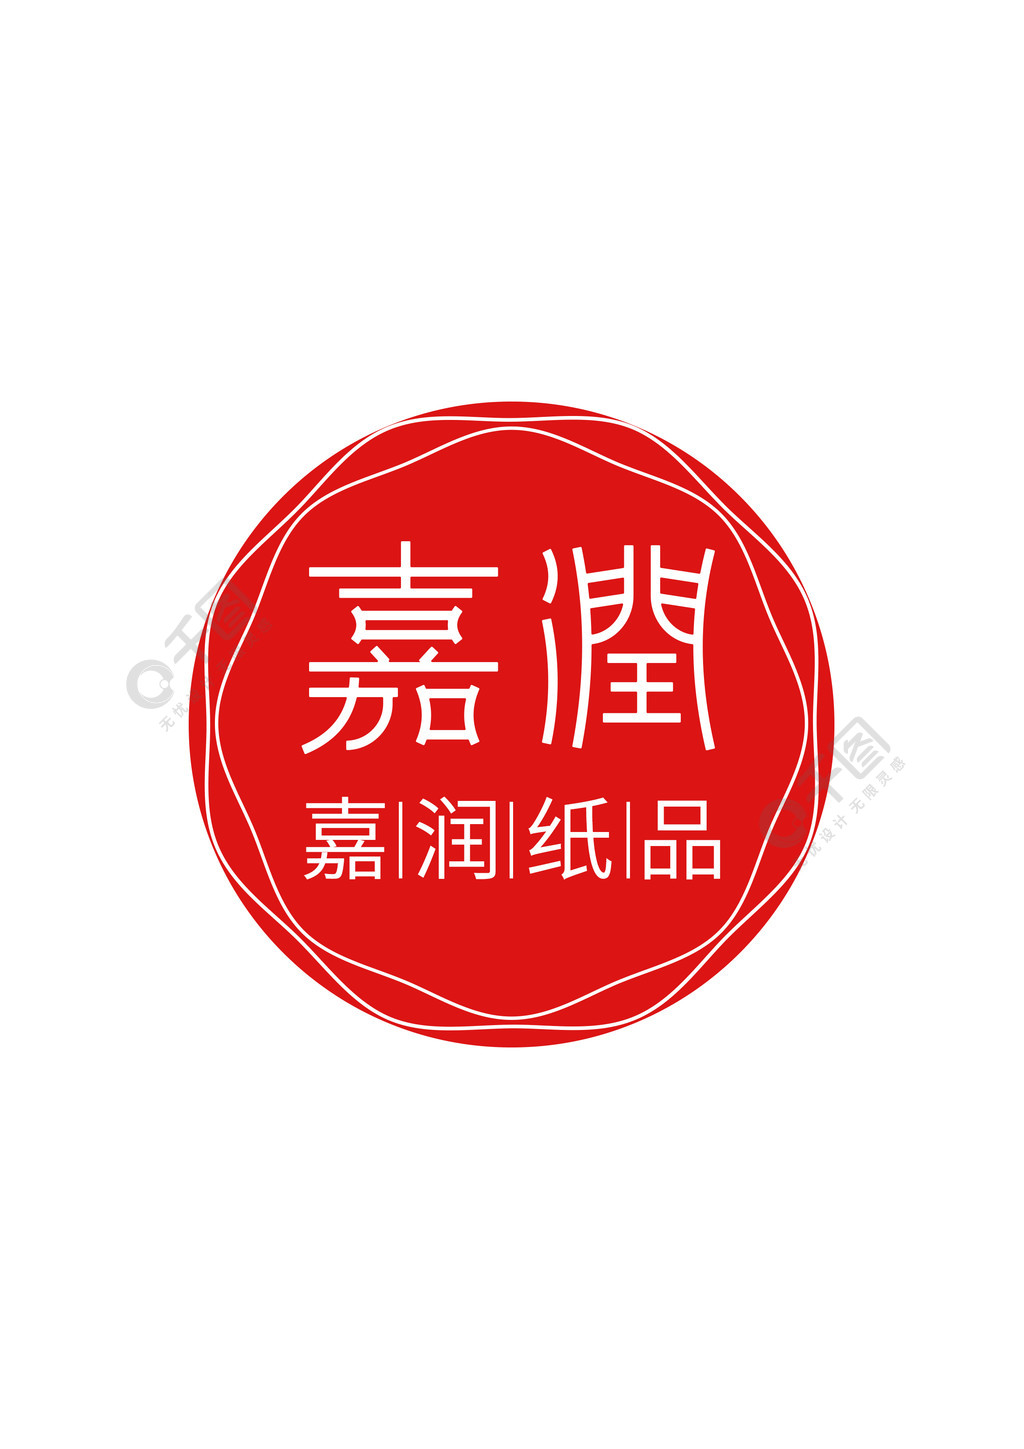 嘉logo 带嘉字logo